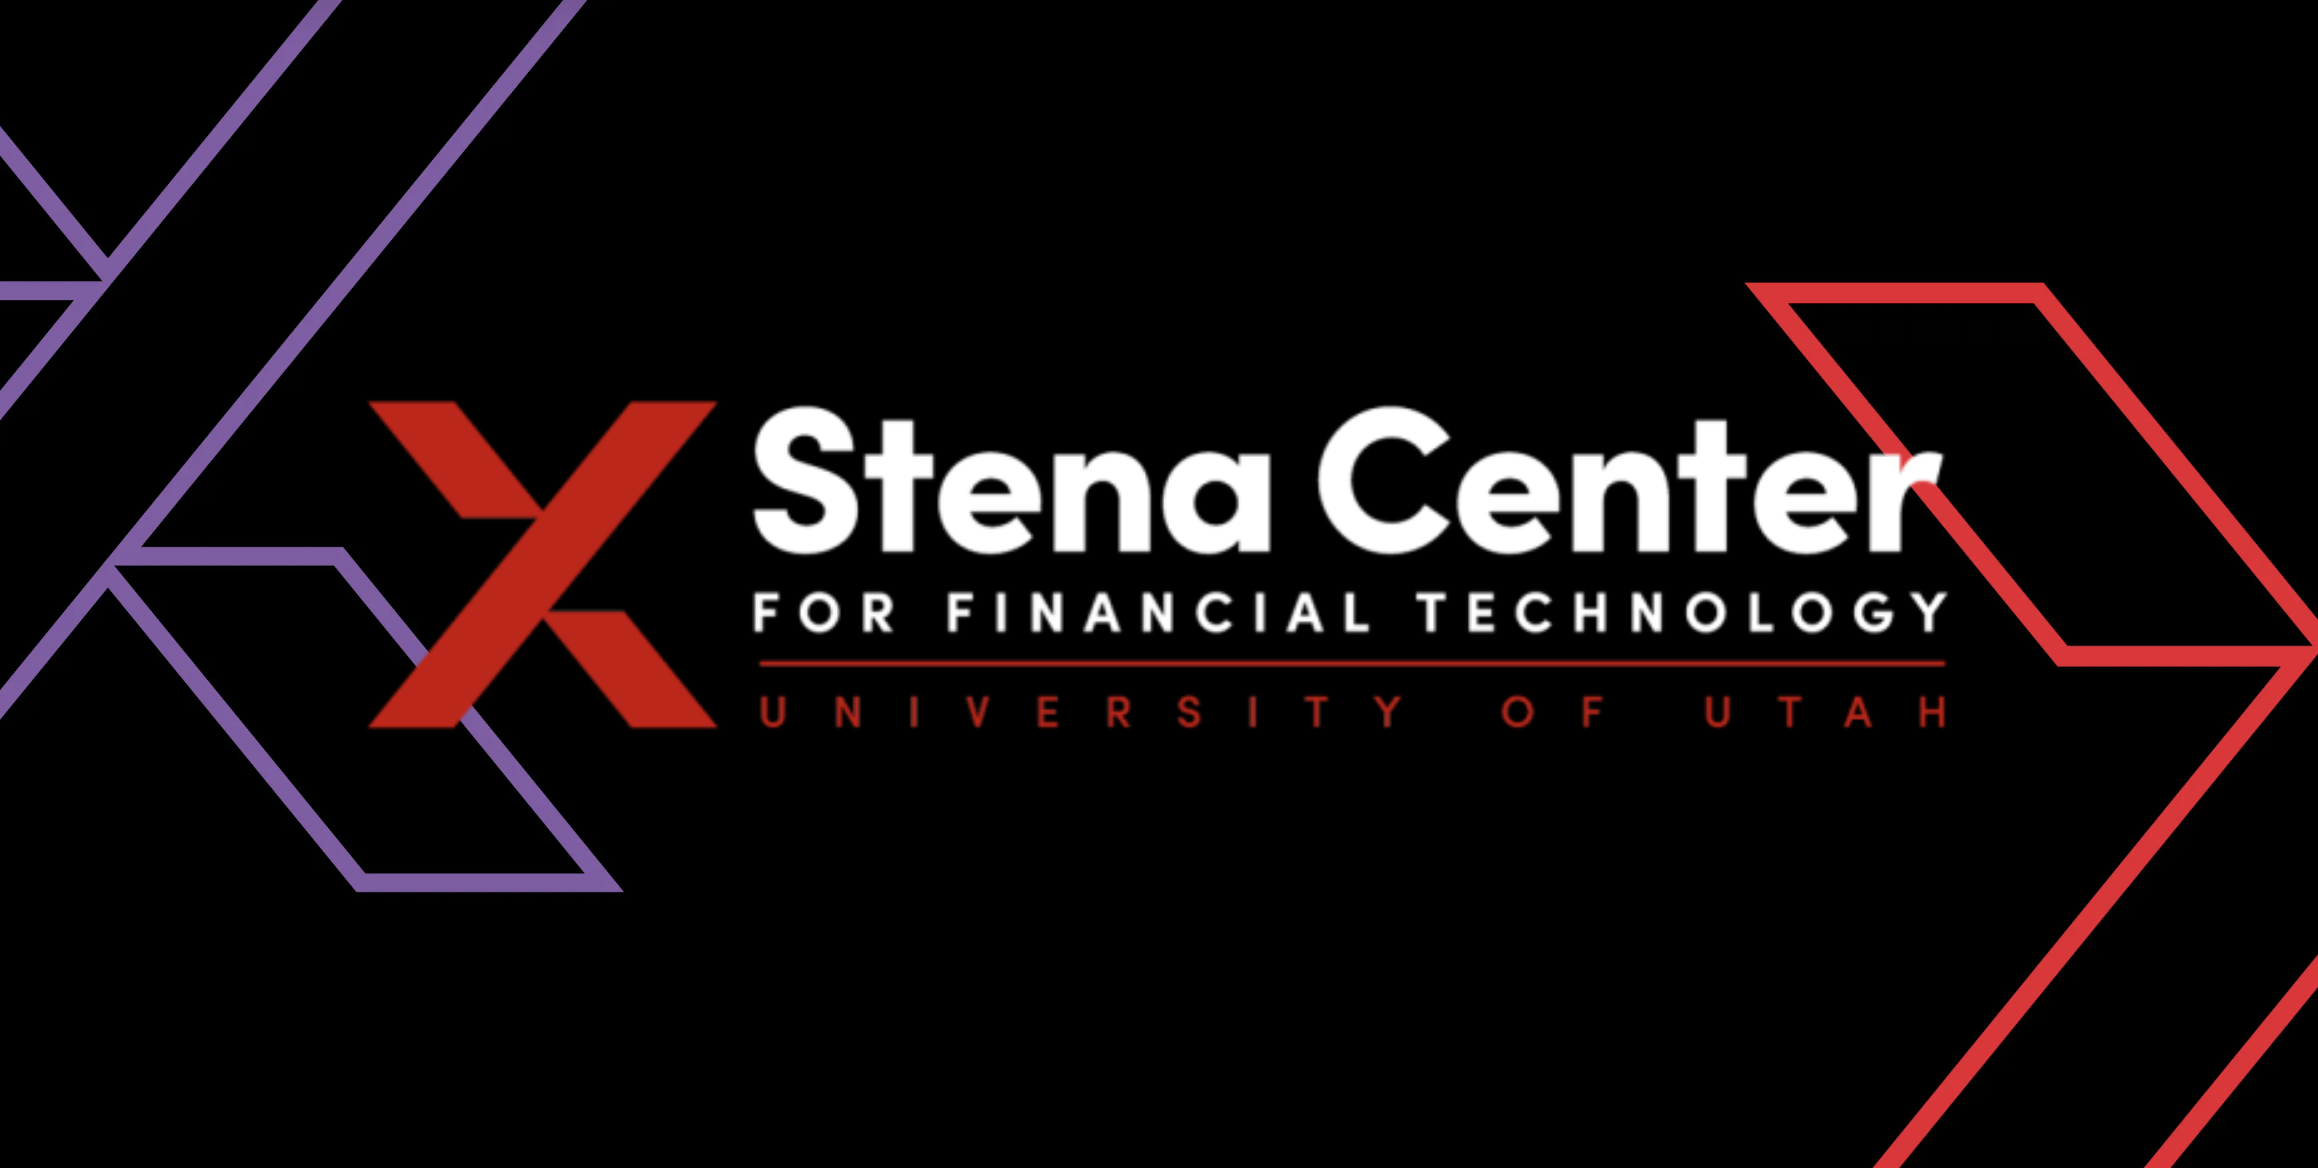 Stena Center for Financial Technology